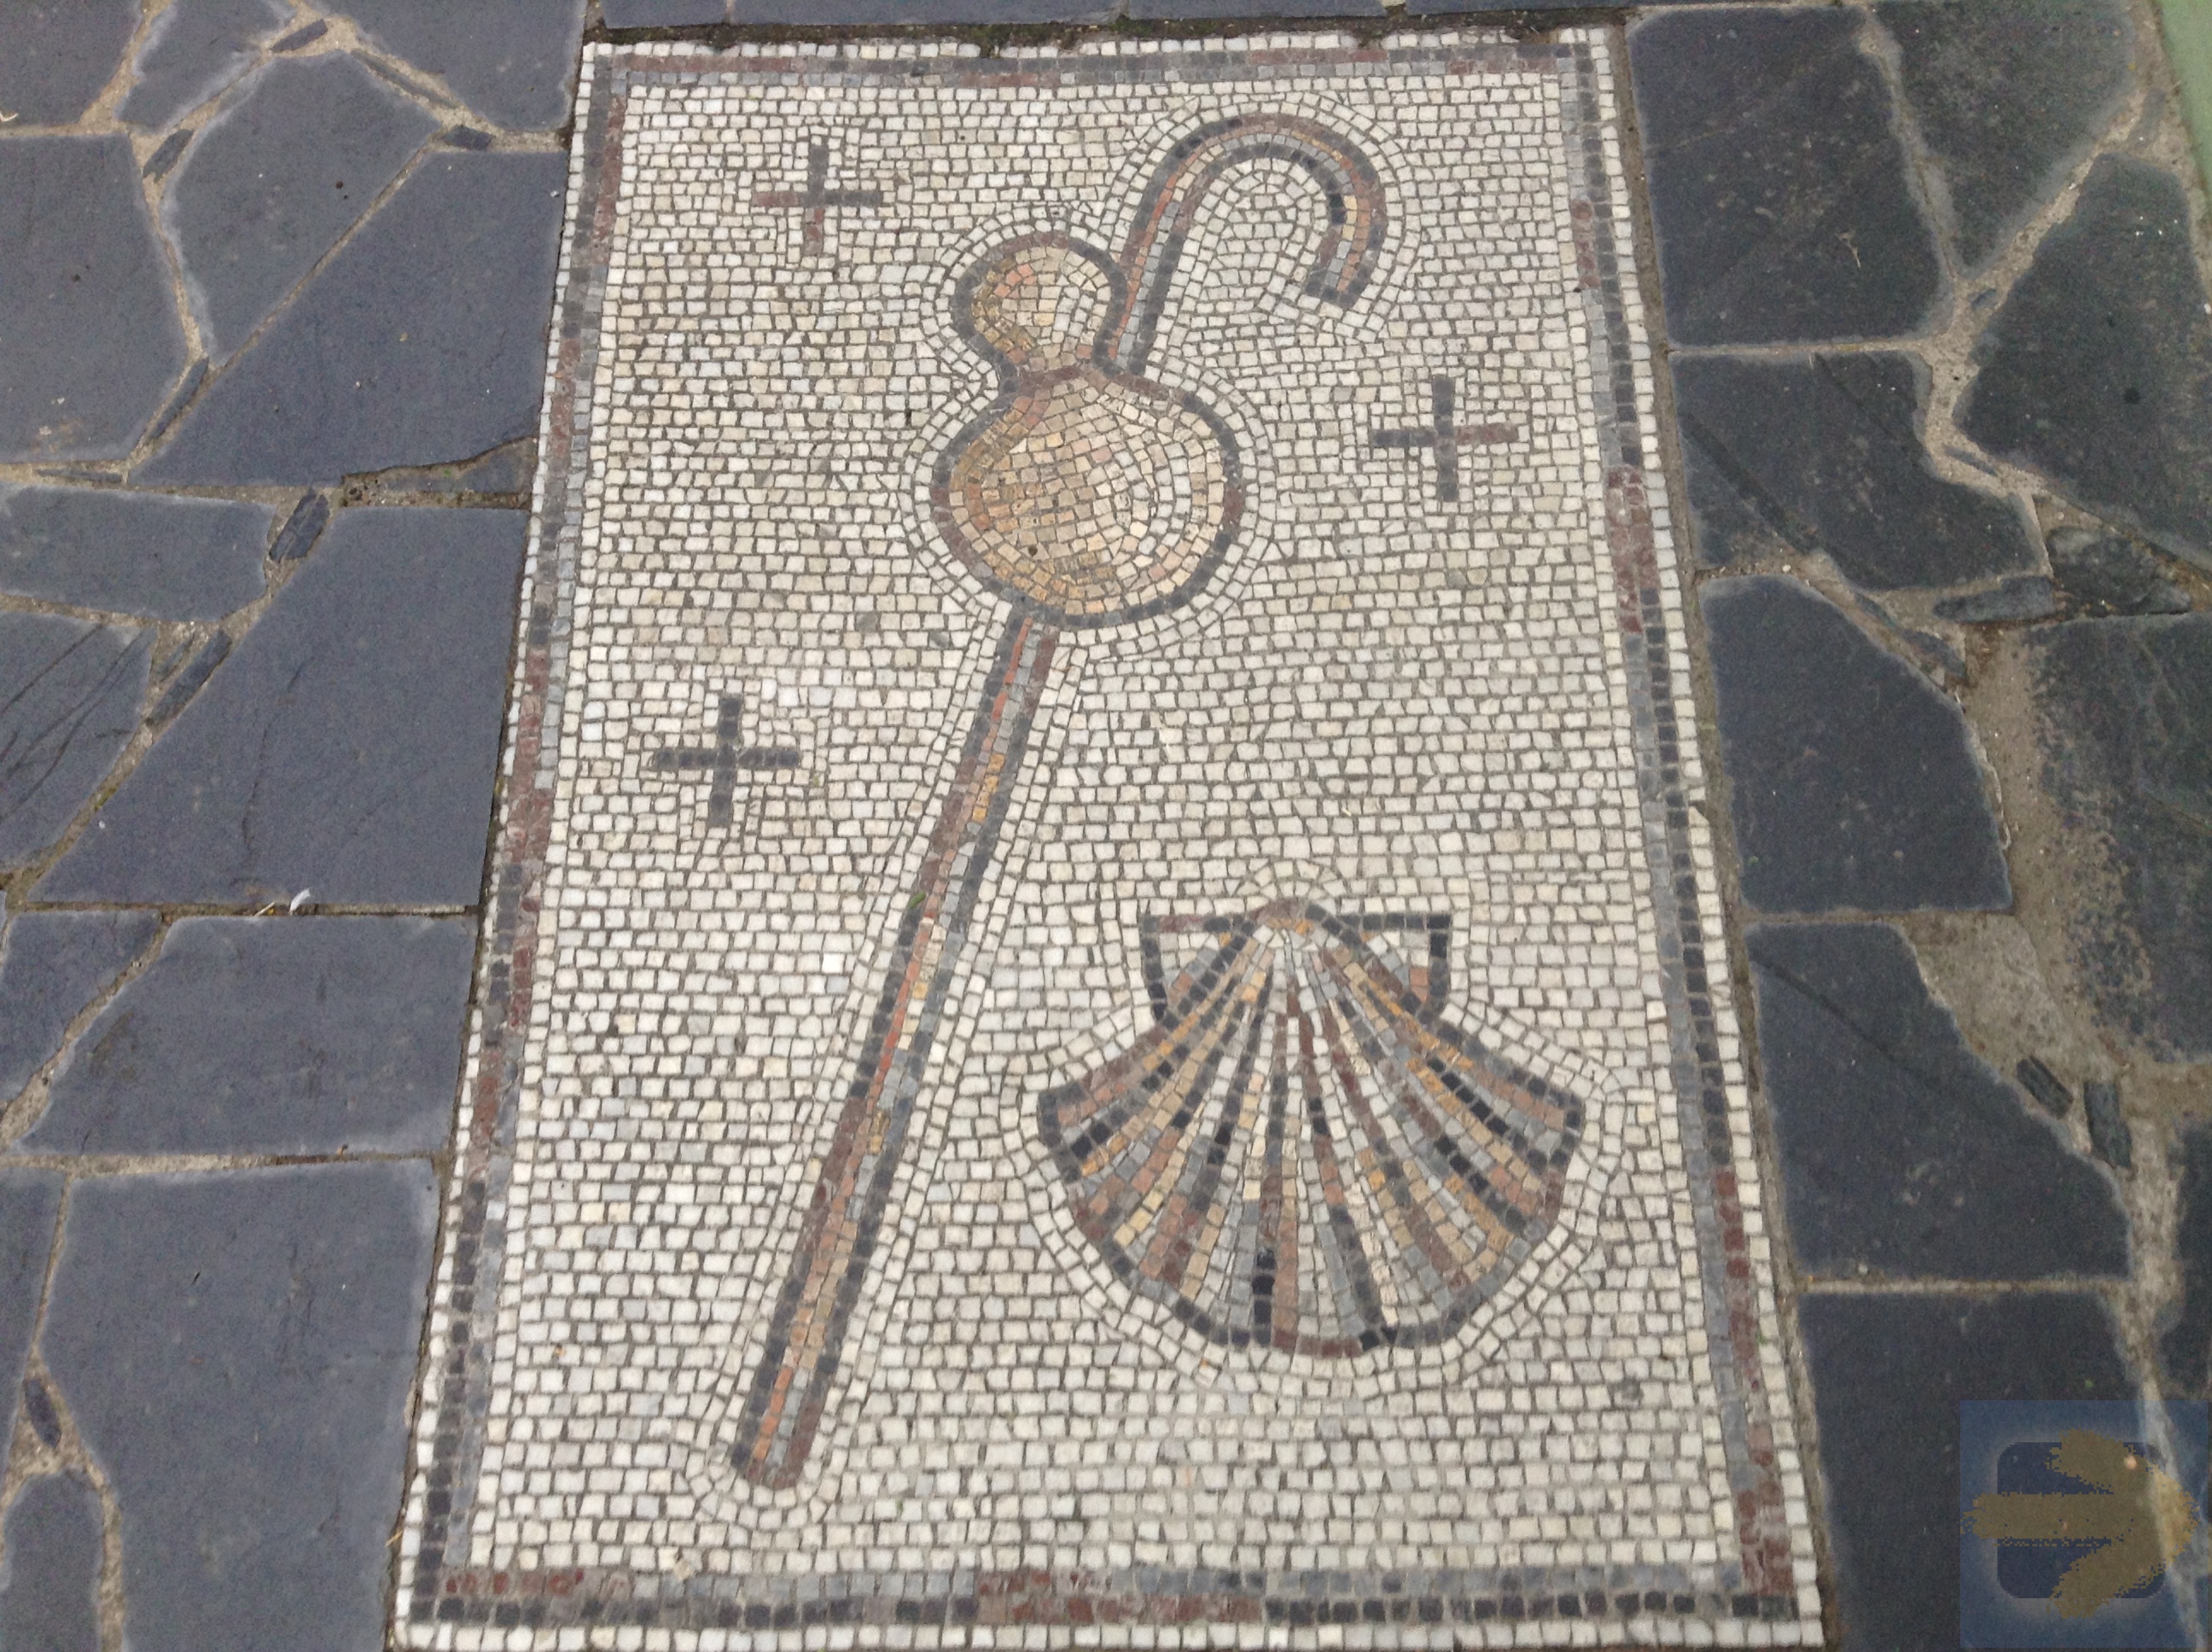 Sarria sidewalk mosaic